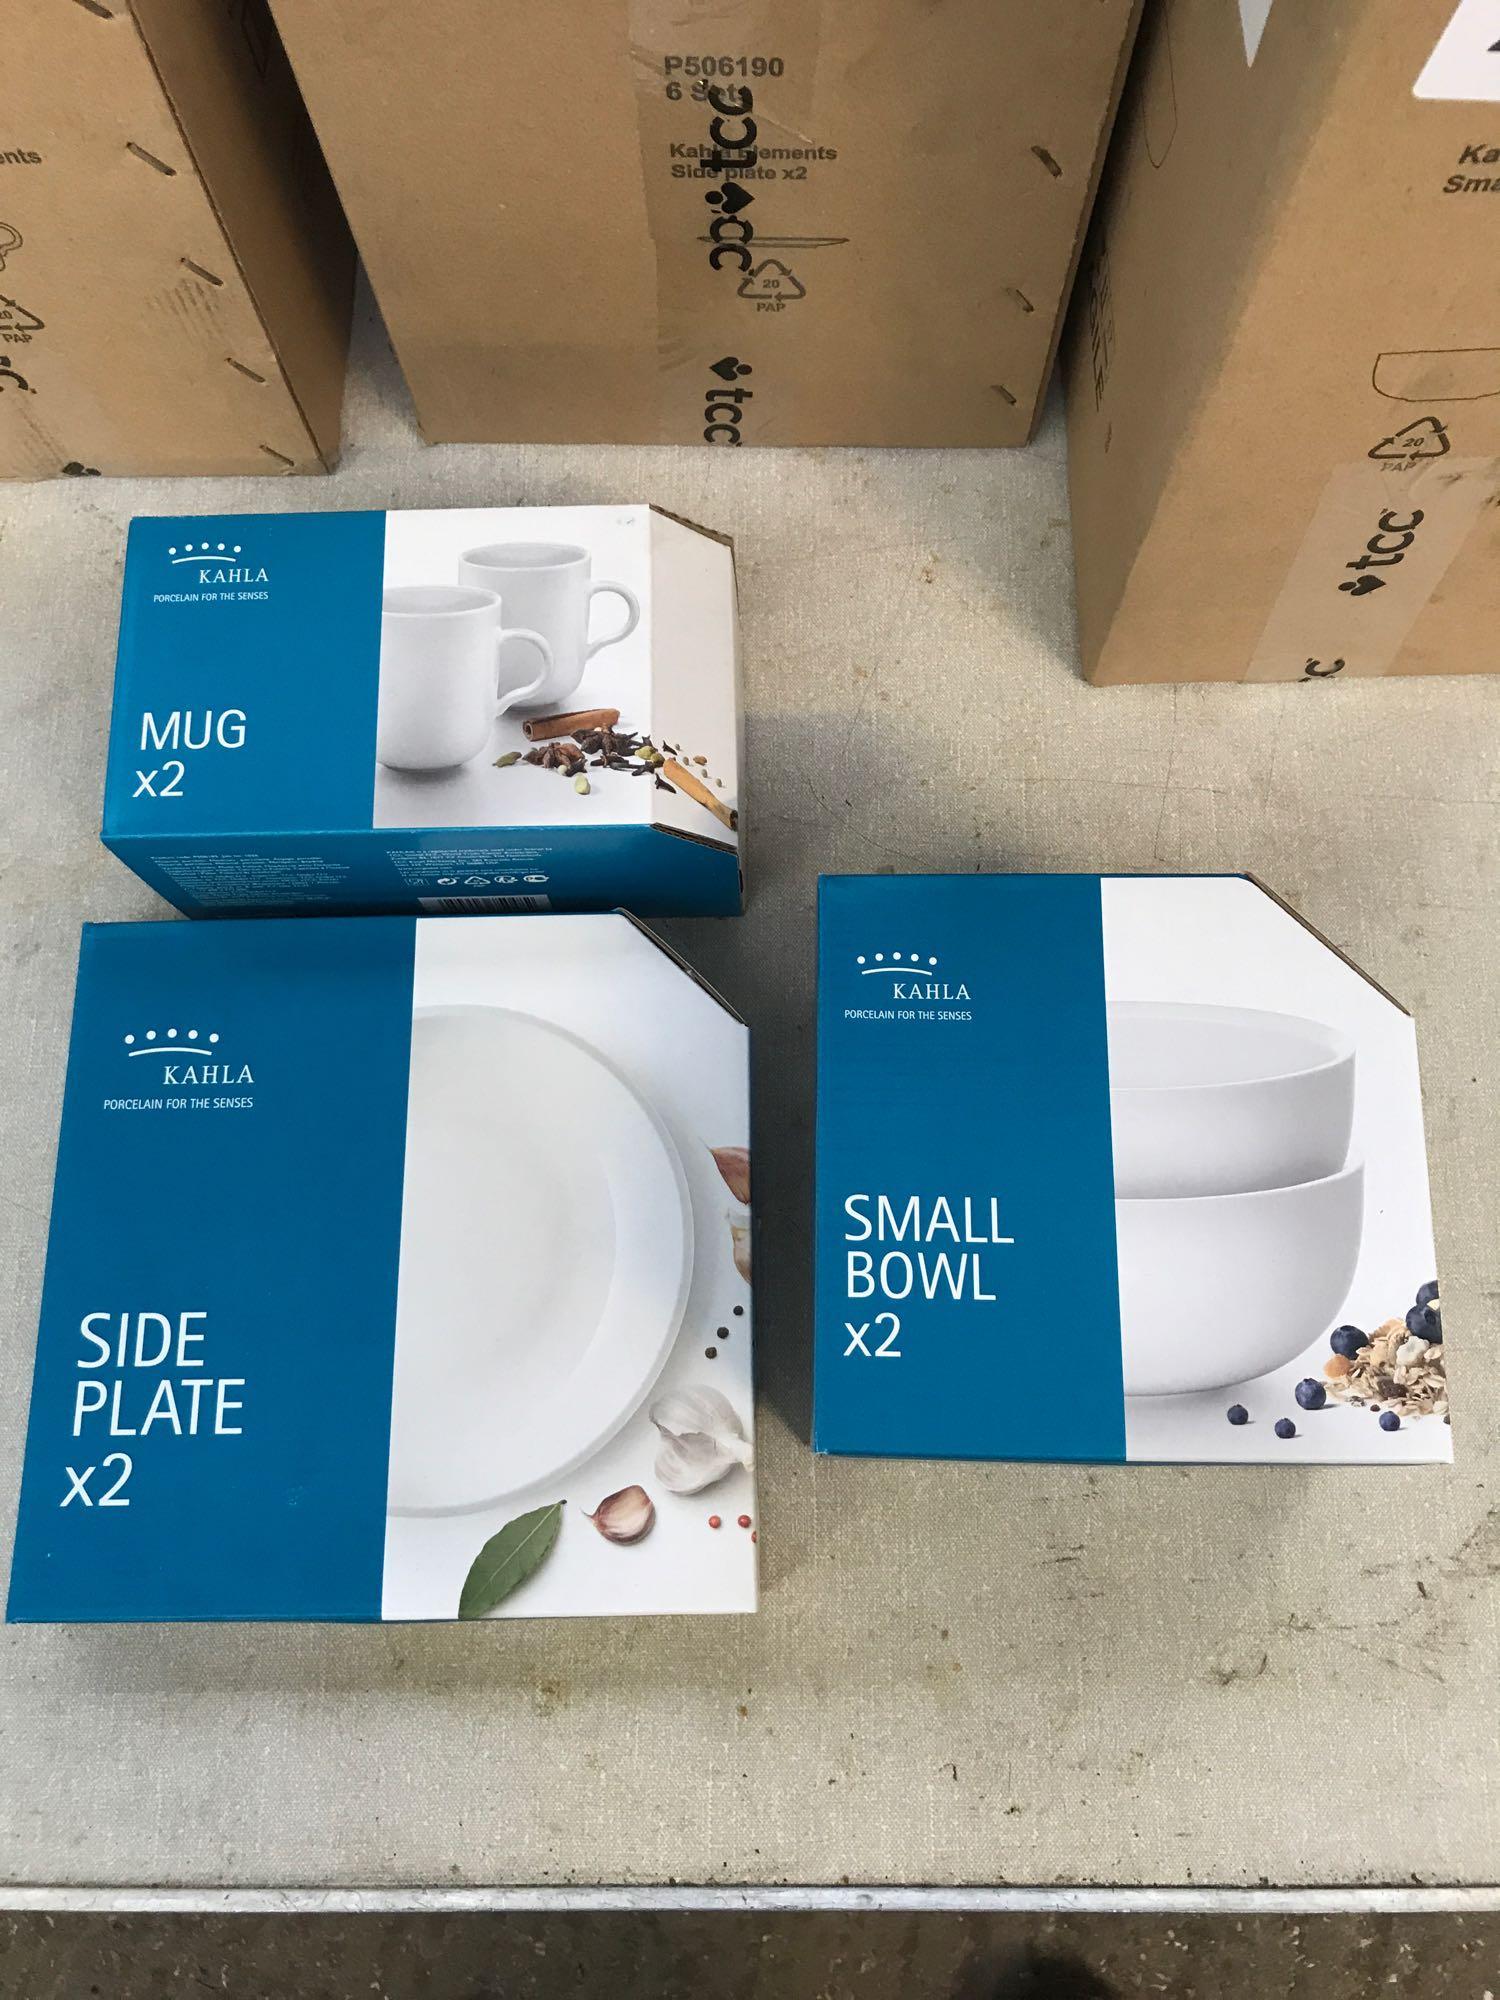 12 mugs, 12 side plates, 12 small bowls